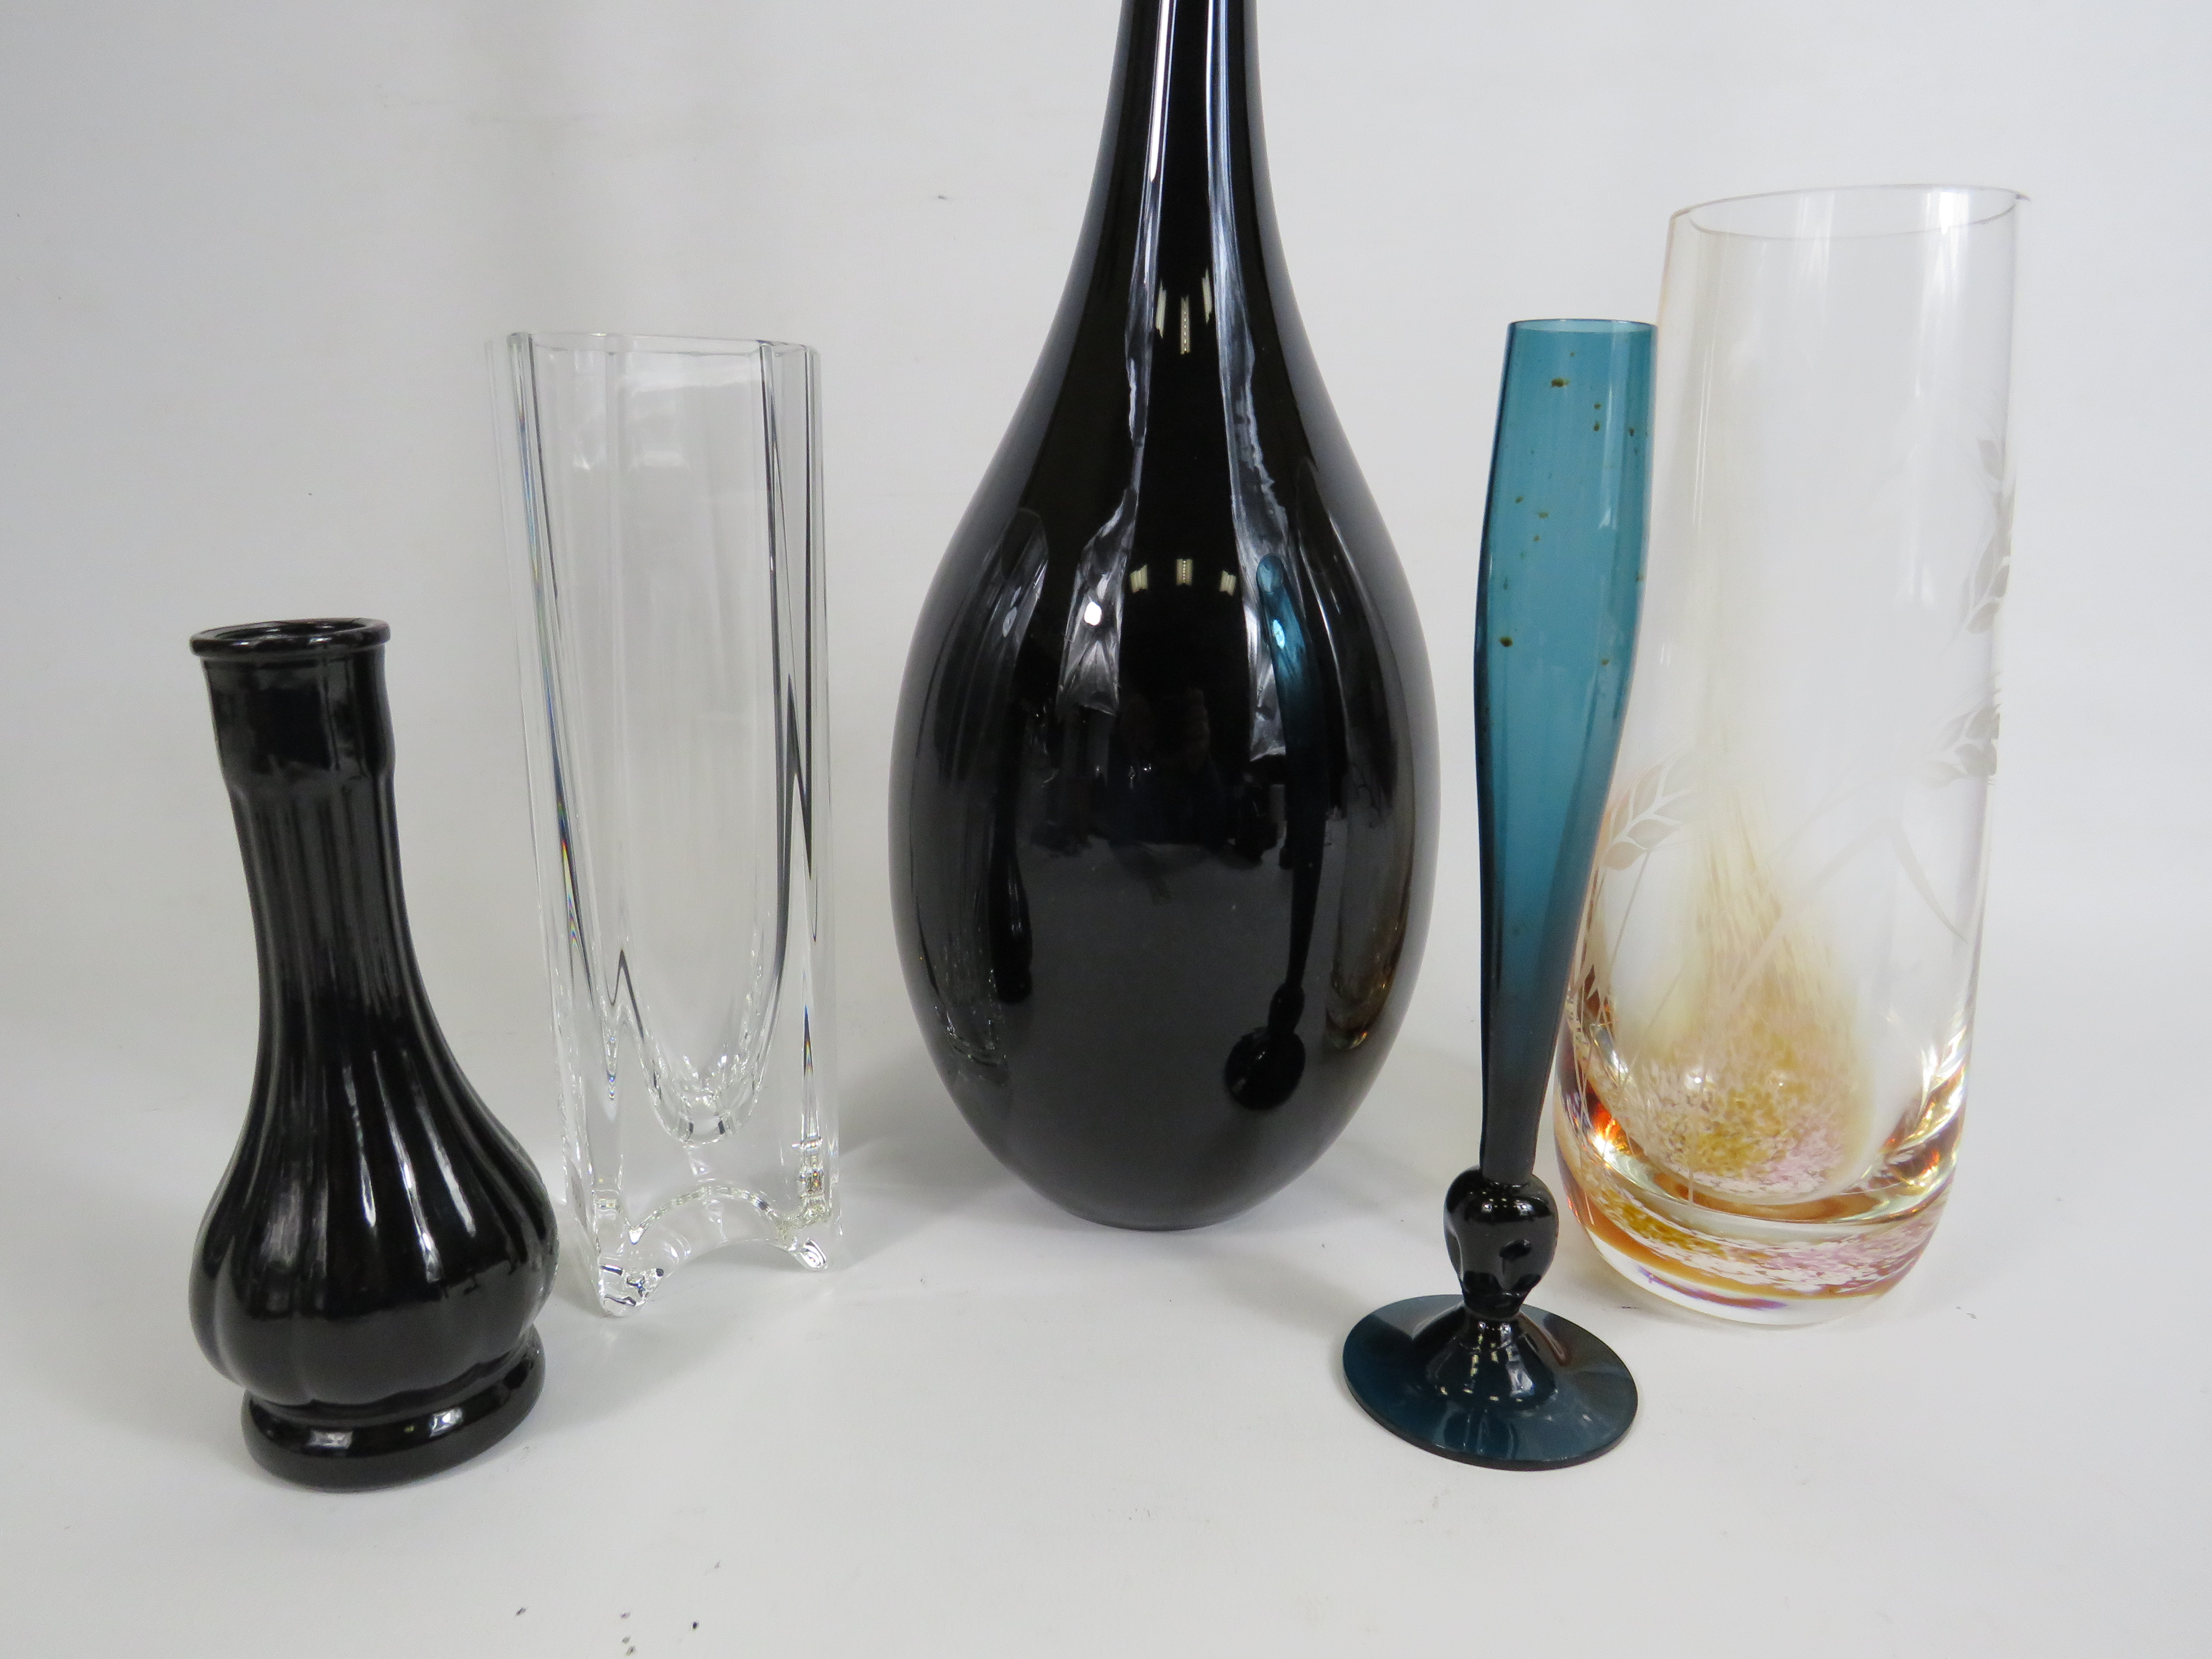 Vintage black glass orchid vase possibly Kosta Boda Kjell Engman, a Serves crystal vase plus other - Image 2 of 2